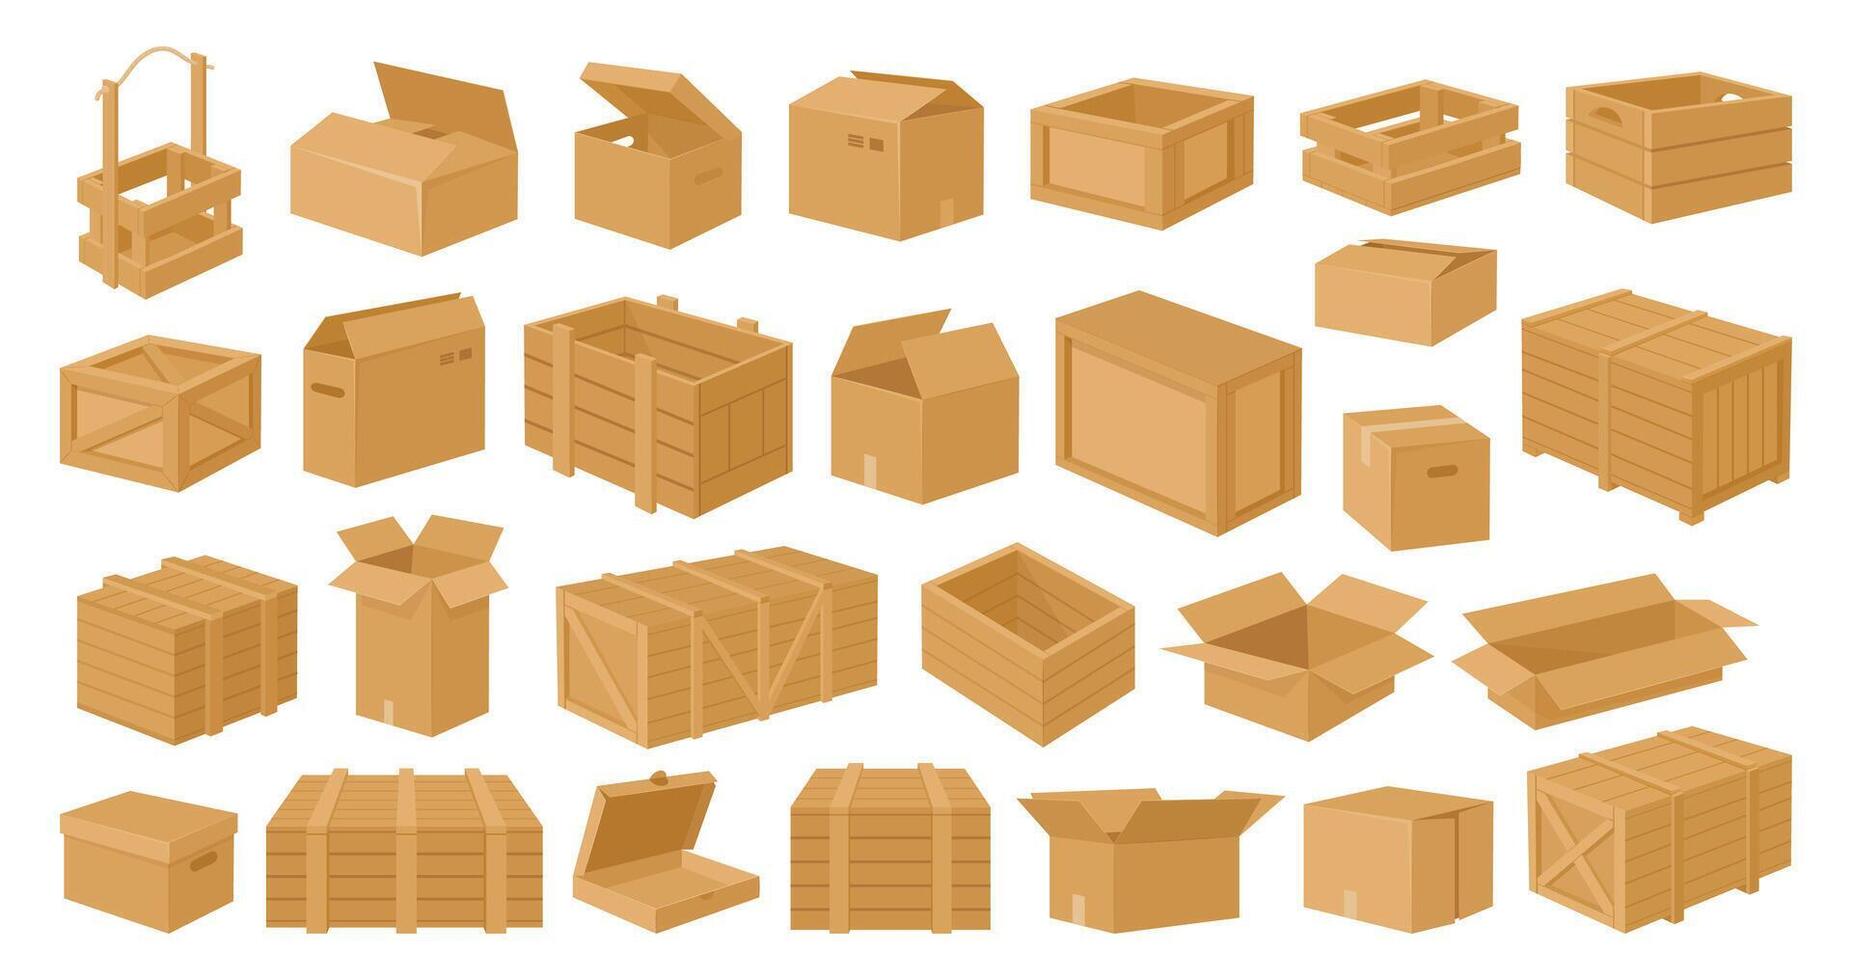 houten en karton dozen. karton levering pakketjes, lading Verzending houten dozen vlak vector illustratie set. tekenfilm levering pakket verzameling